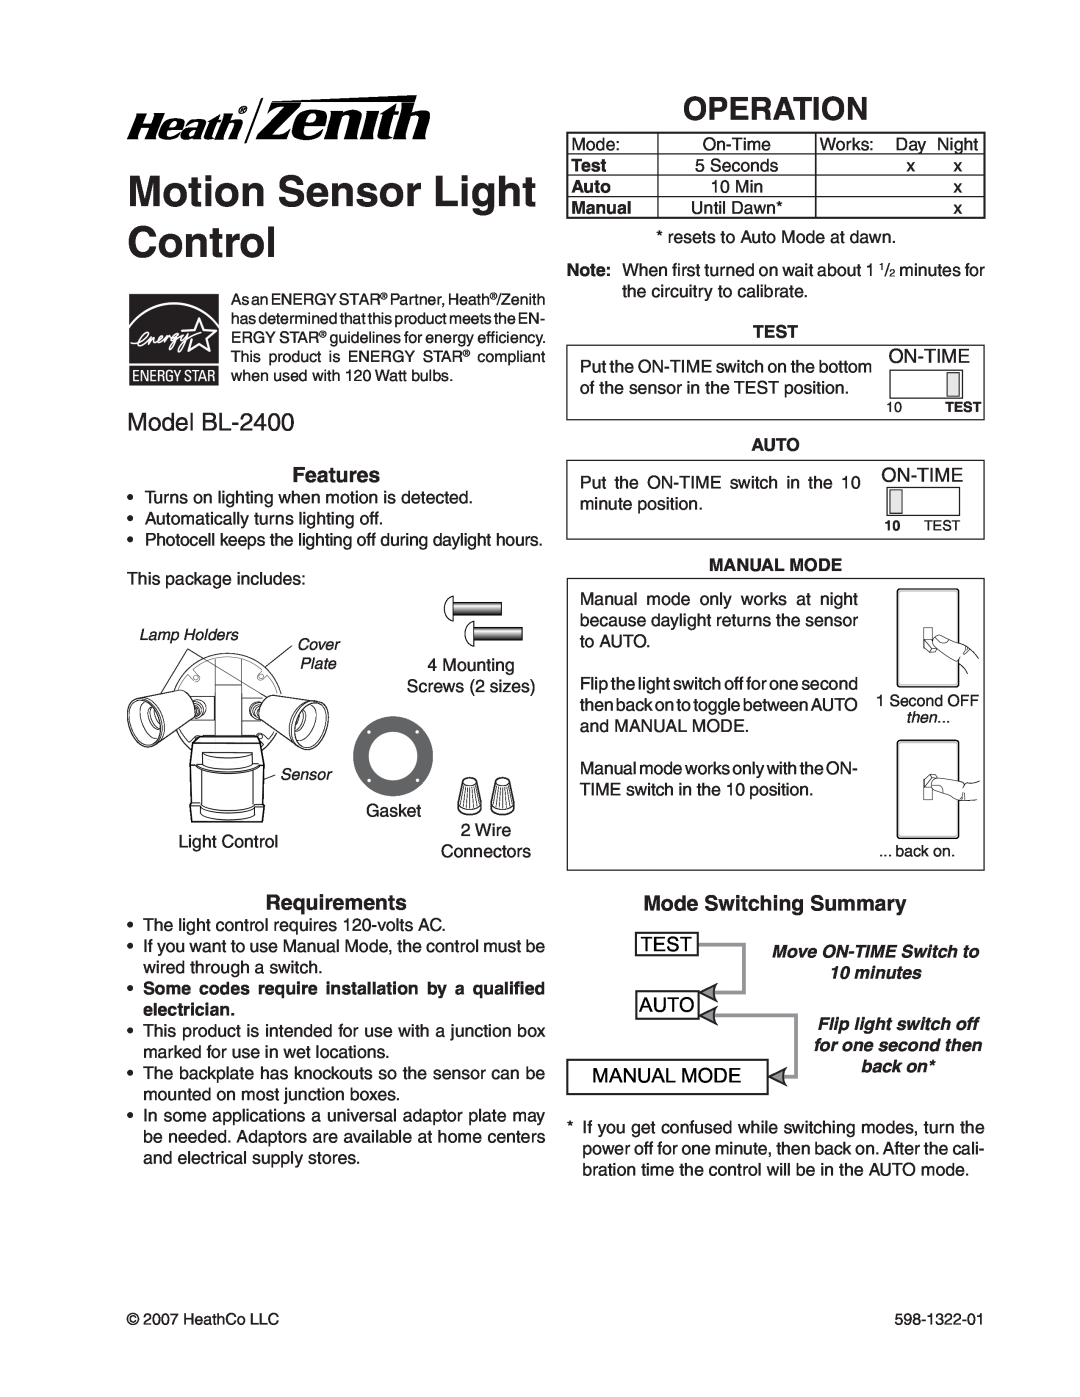 Heath Zenith manual Motion Sensor Light Control, Operation, Model BL-2400, On-Time, Test, Auto, Manual Mode, minutes 